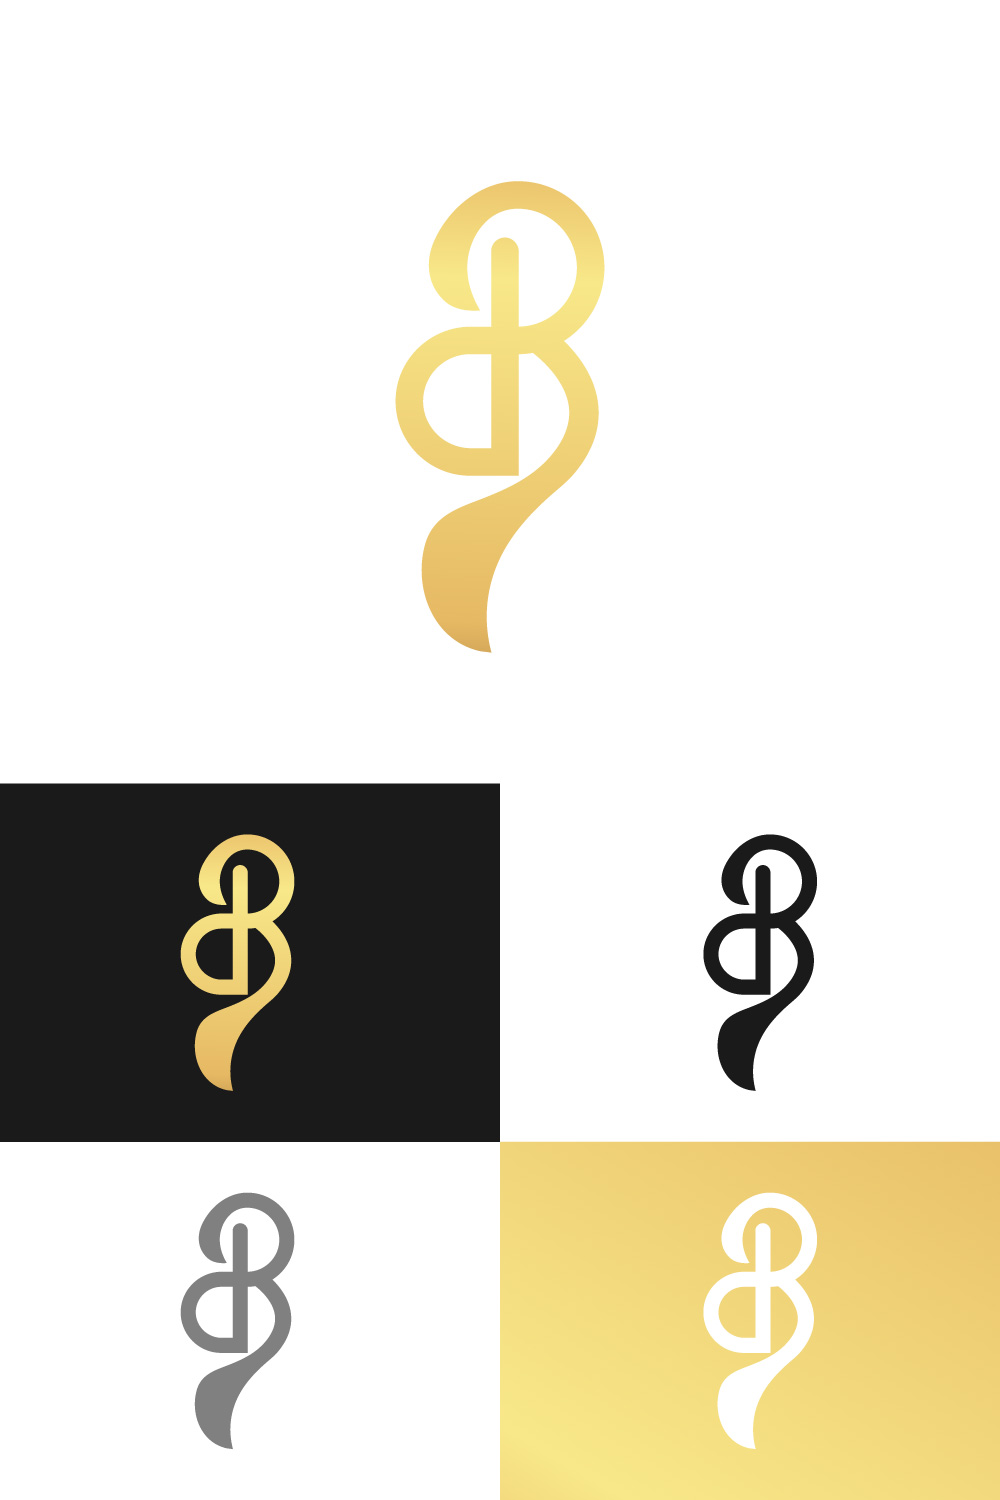 Luxury DB logo design pinterest preview image.